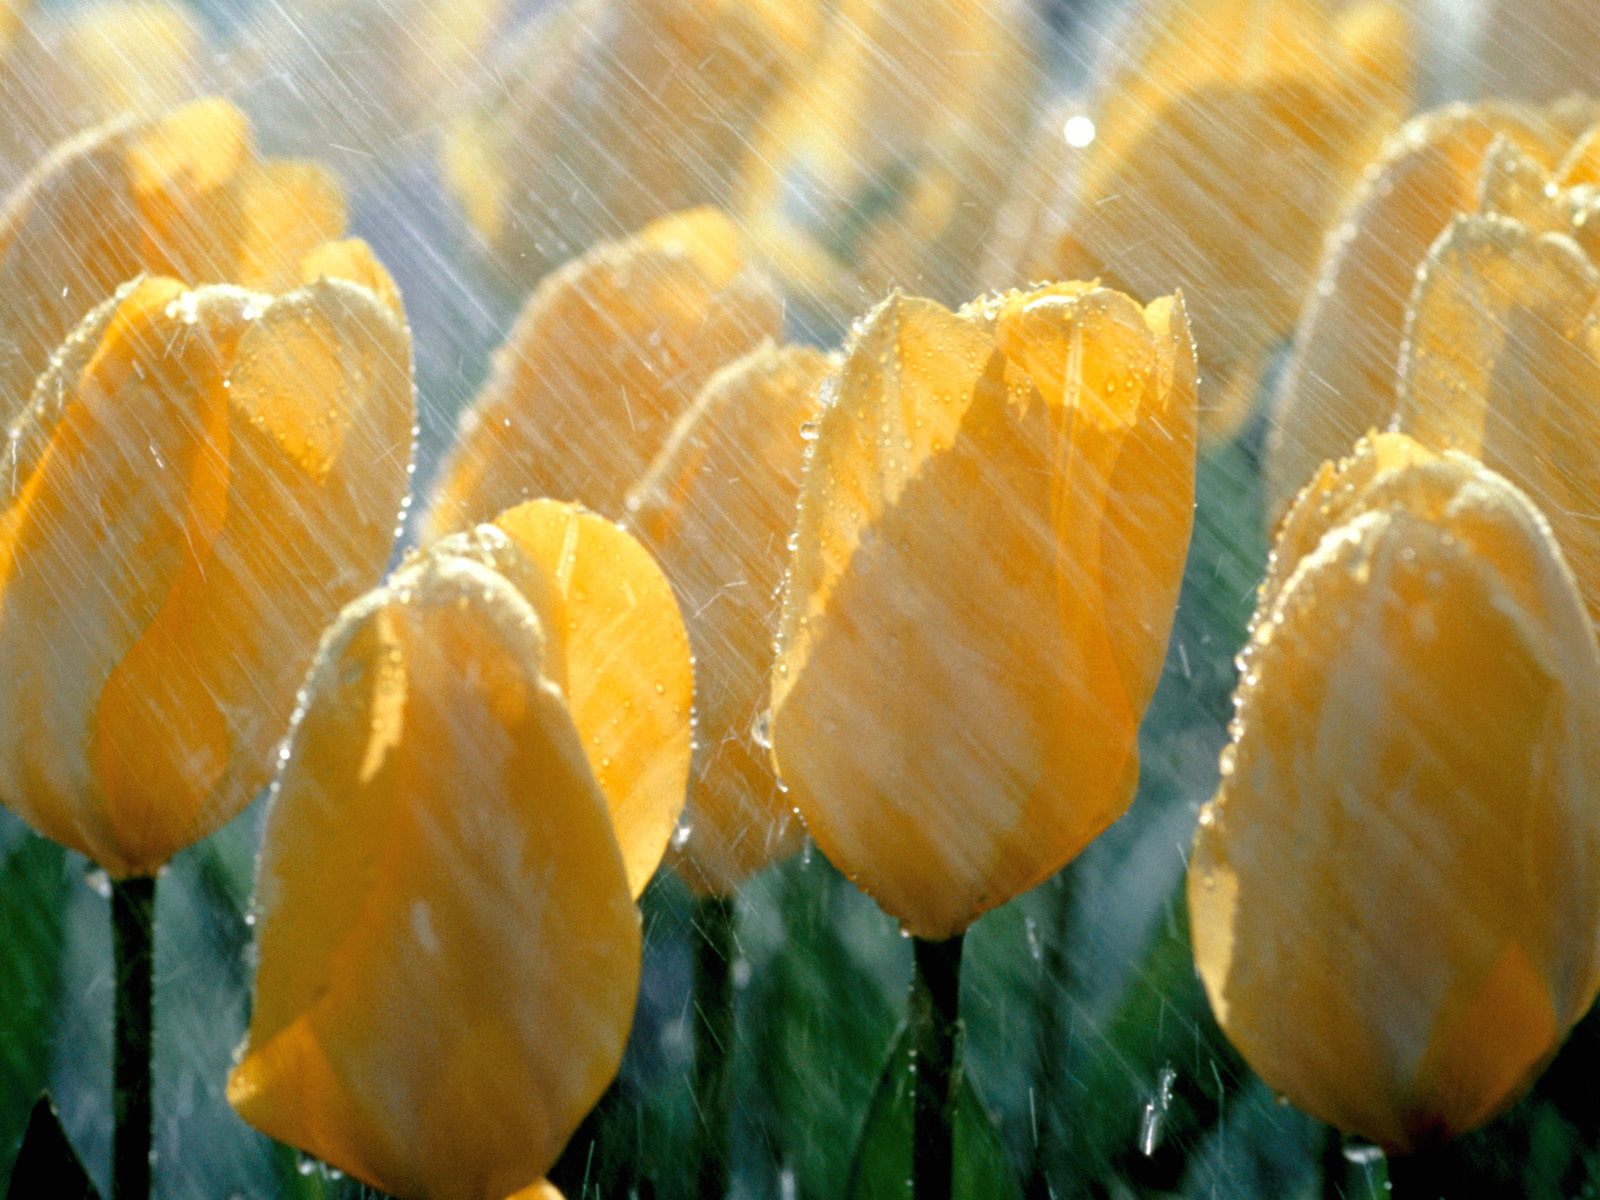 http://4.bp.blogspot.com/-wA9ArvyVmys/T2cSSWvolGI/AAAAAAAAHeU/--jWlsFSEzA/s1600/free-flower-backgrounds-spring-shower-tulips.jpg